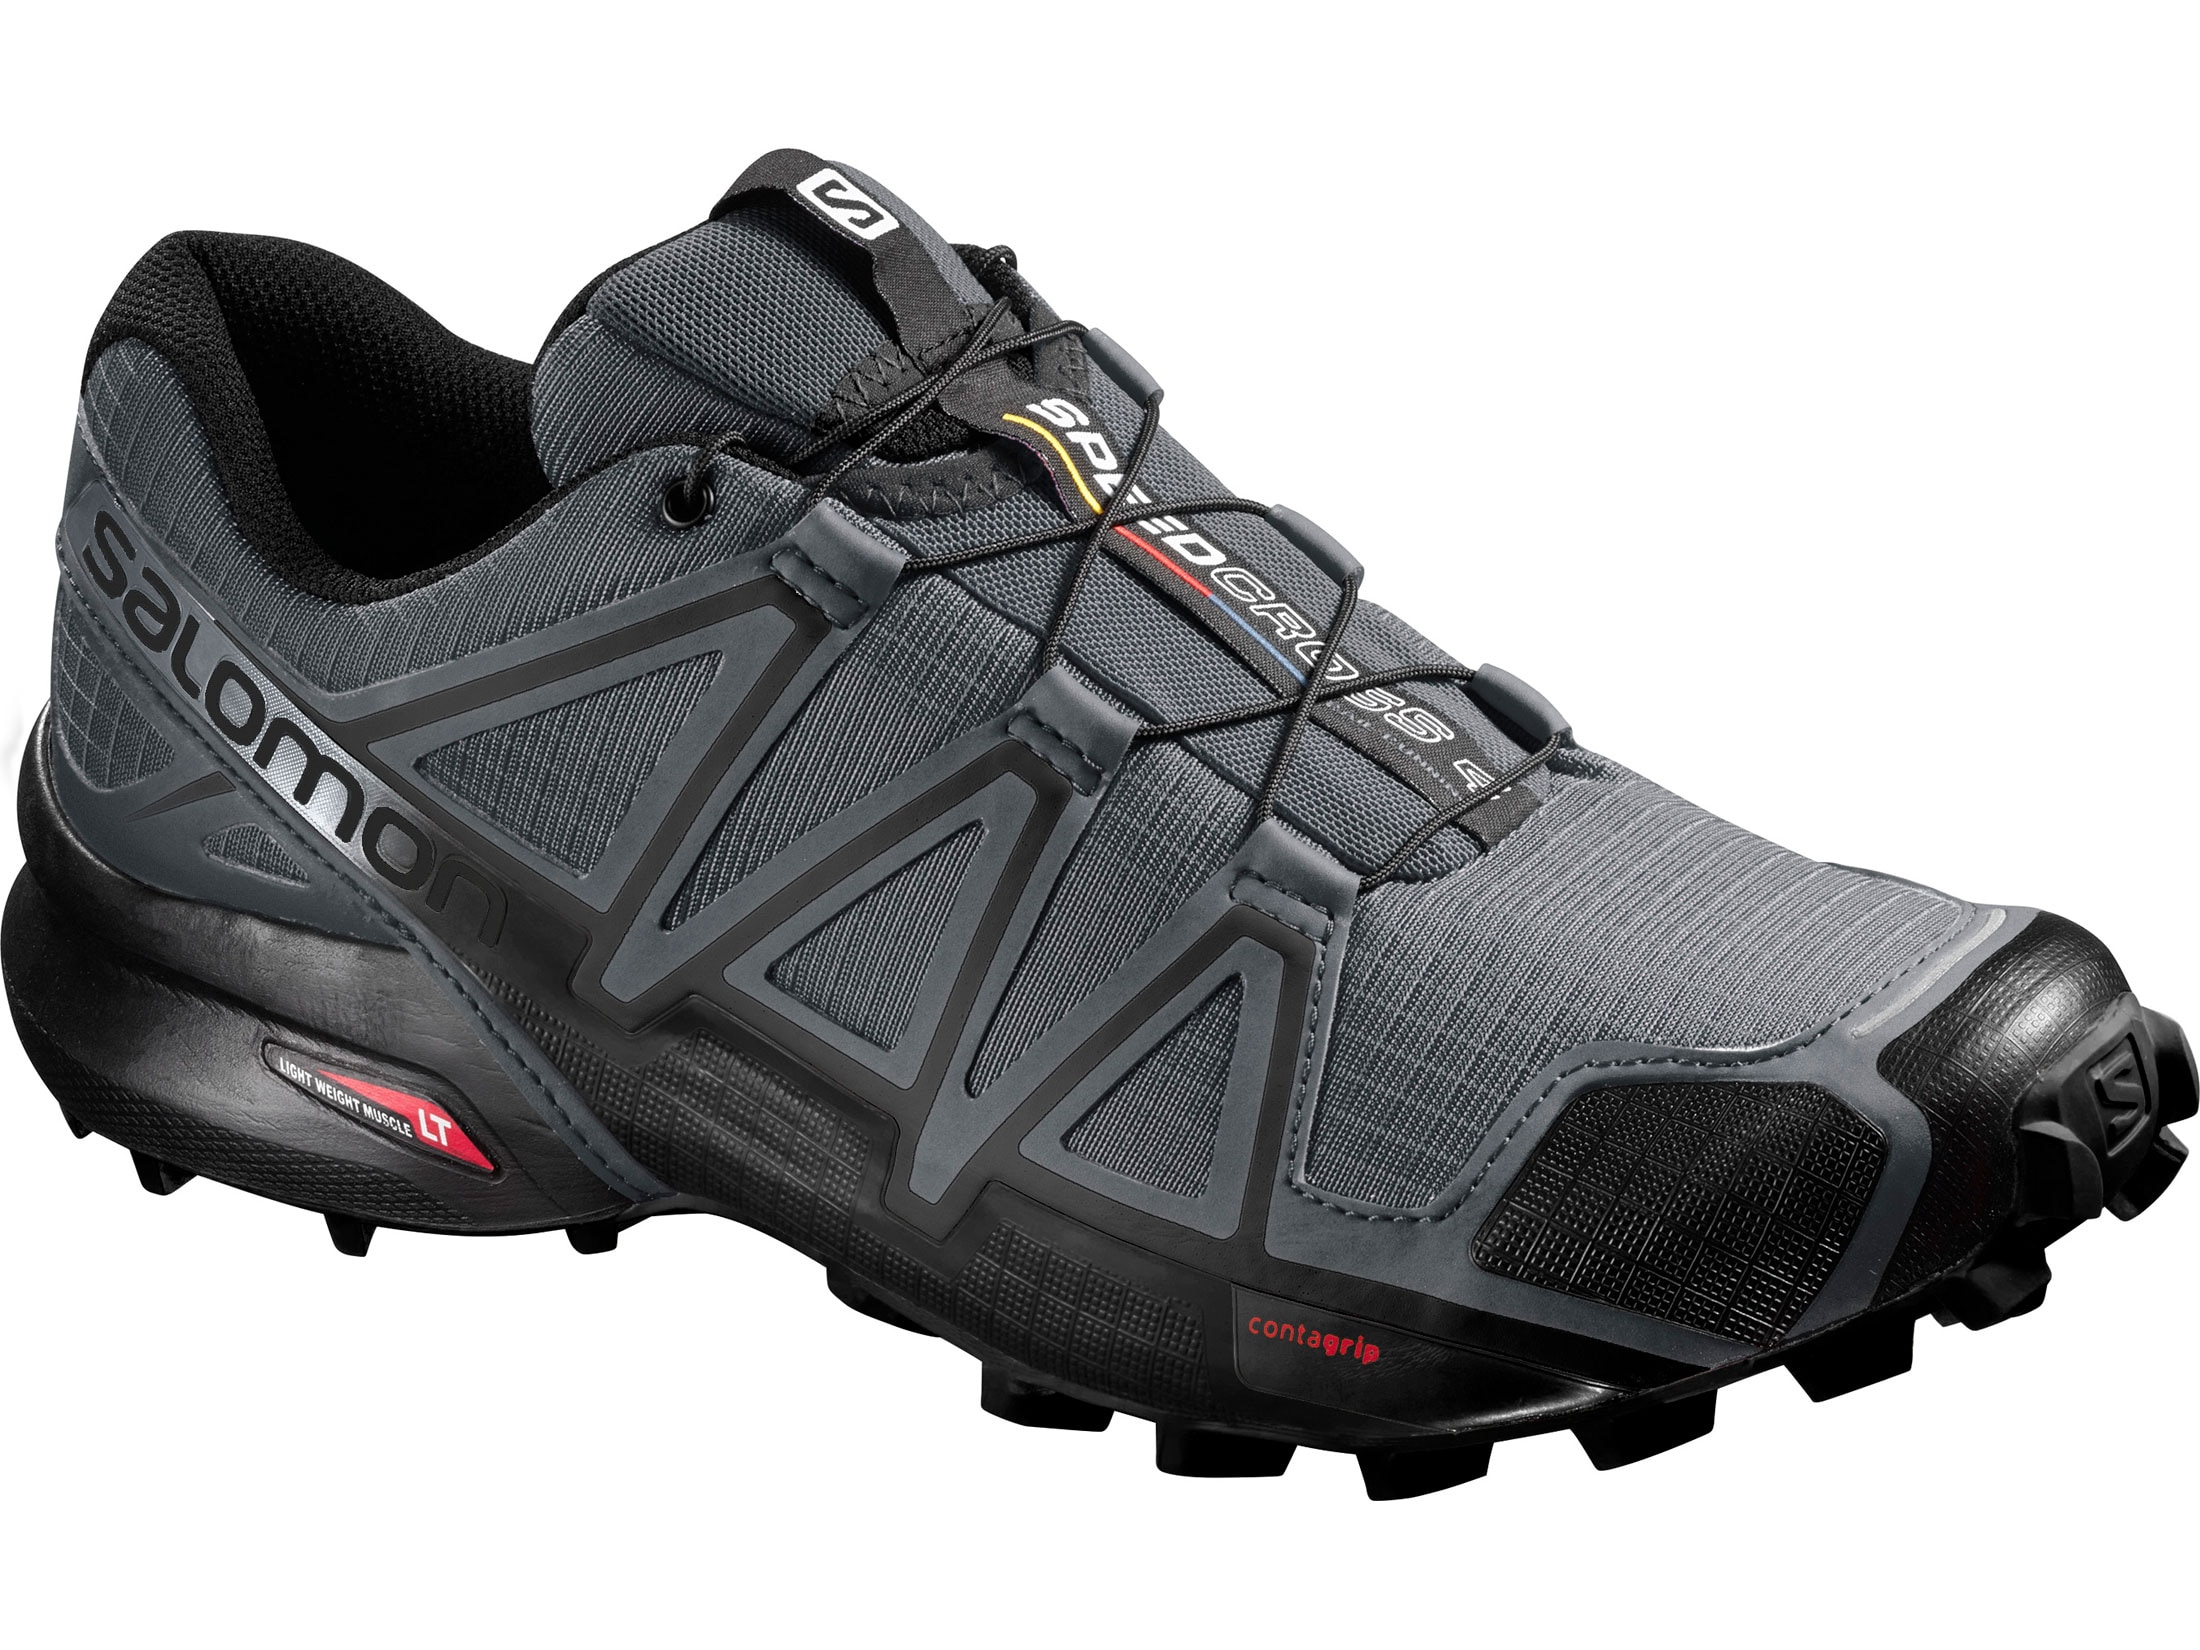 Salomon Speedcross 4 4 Trail Running Shoes Synthetic Dark